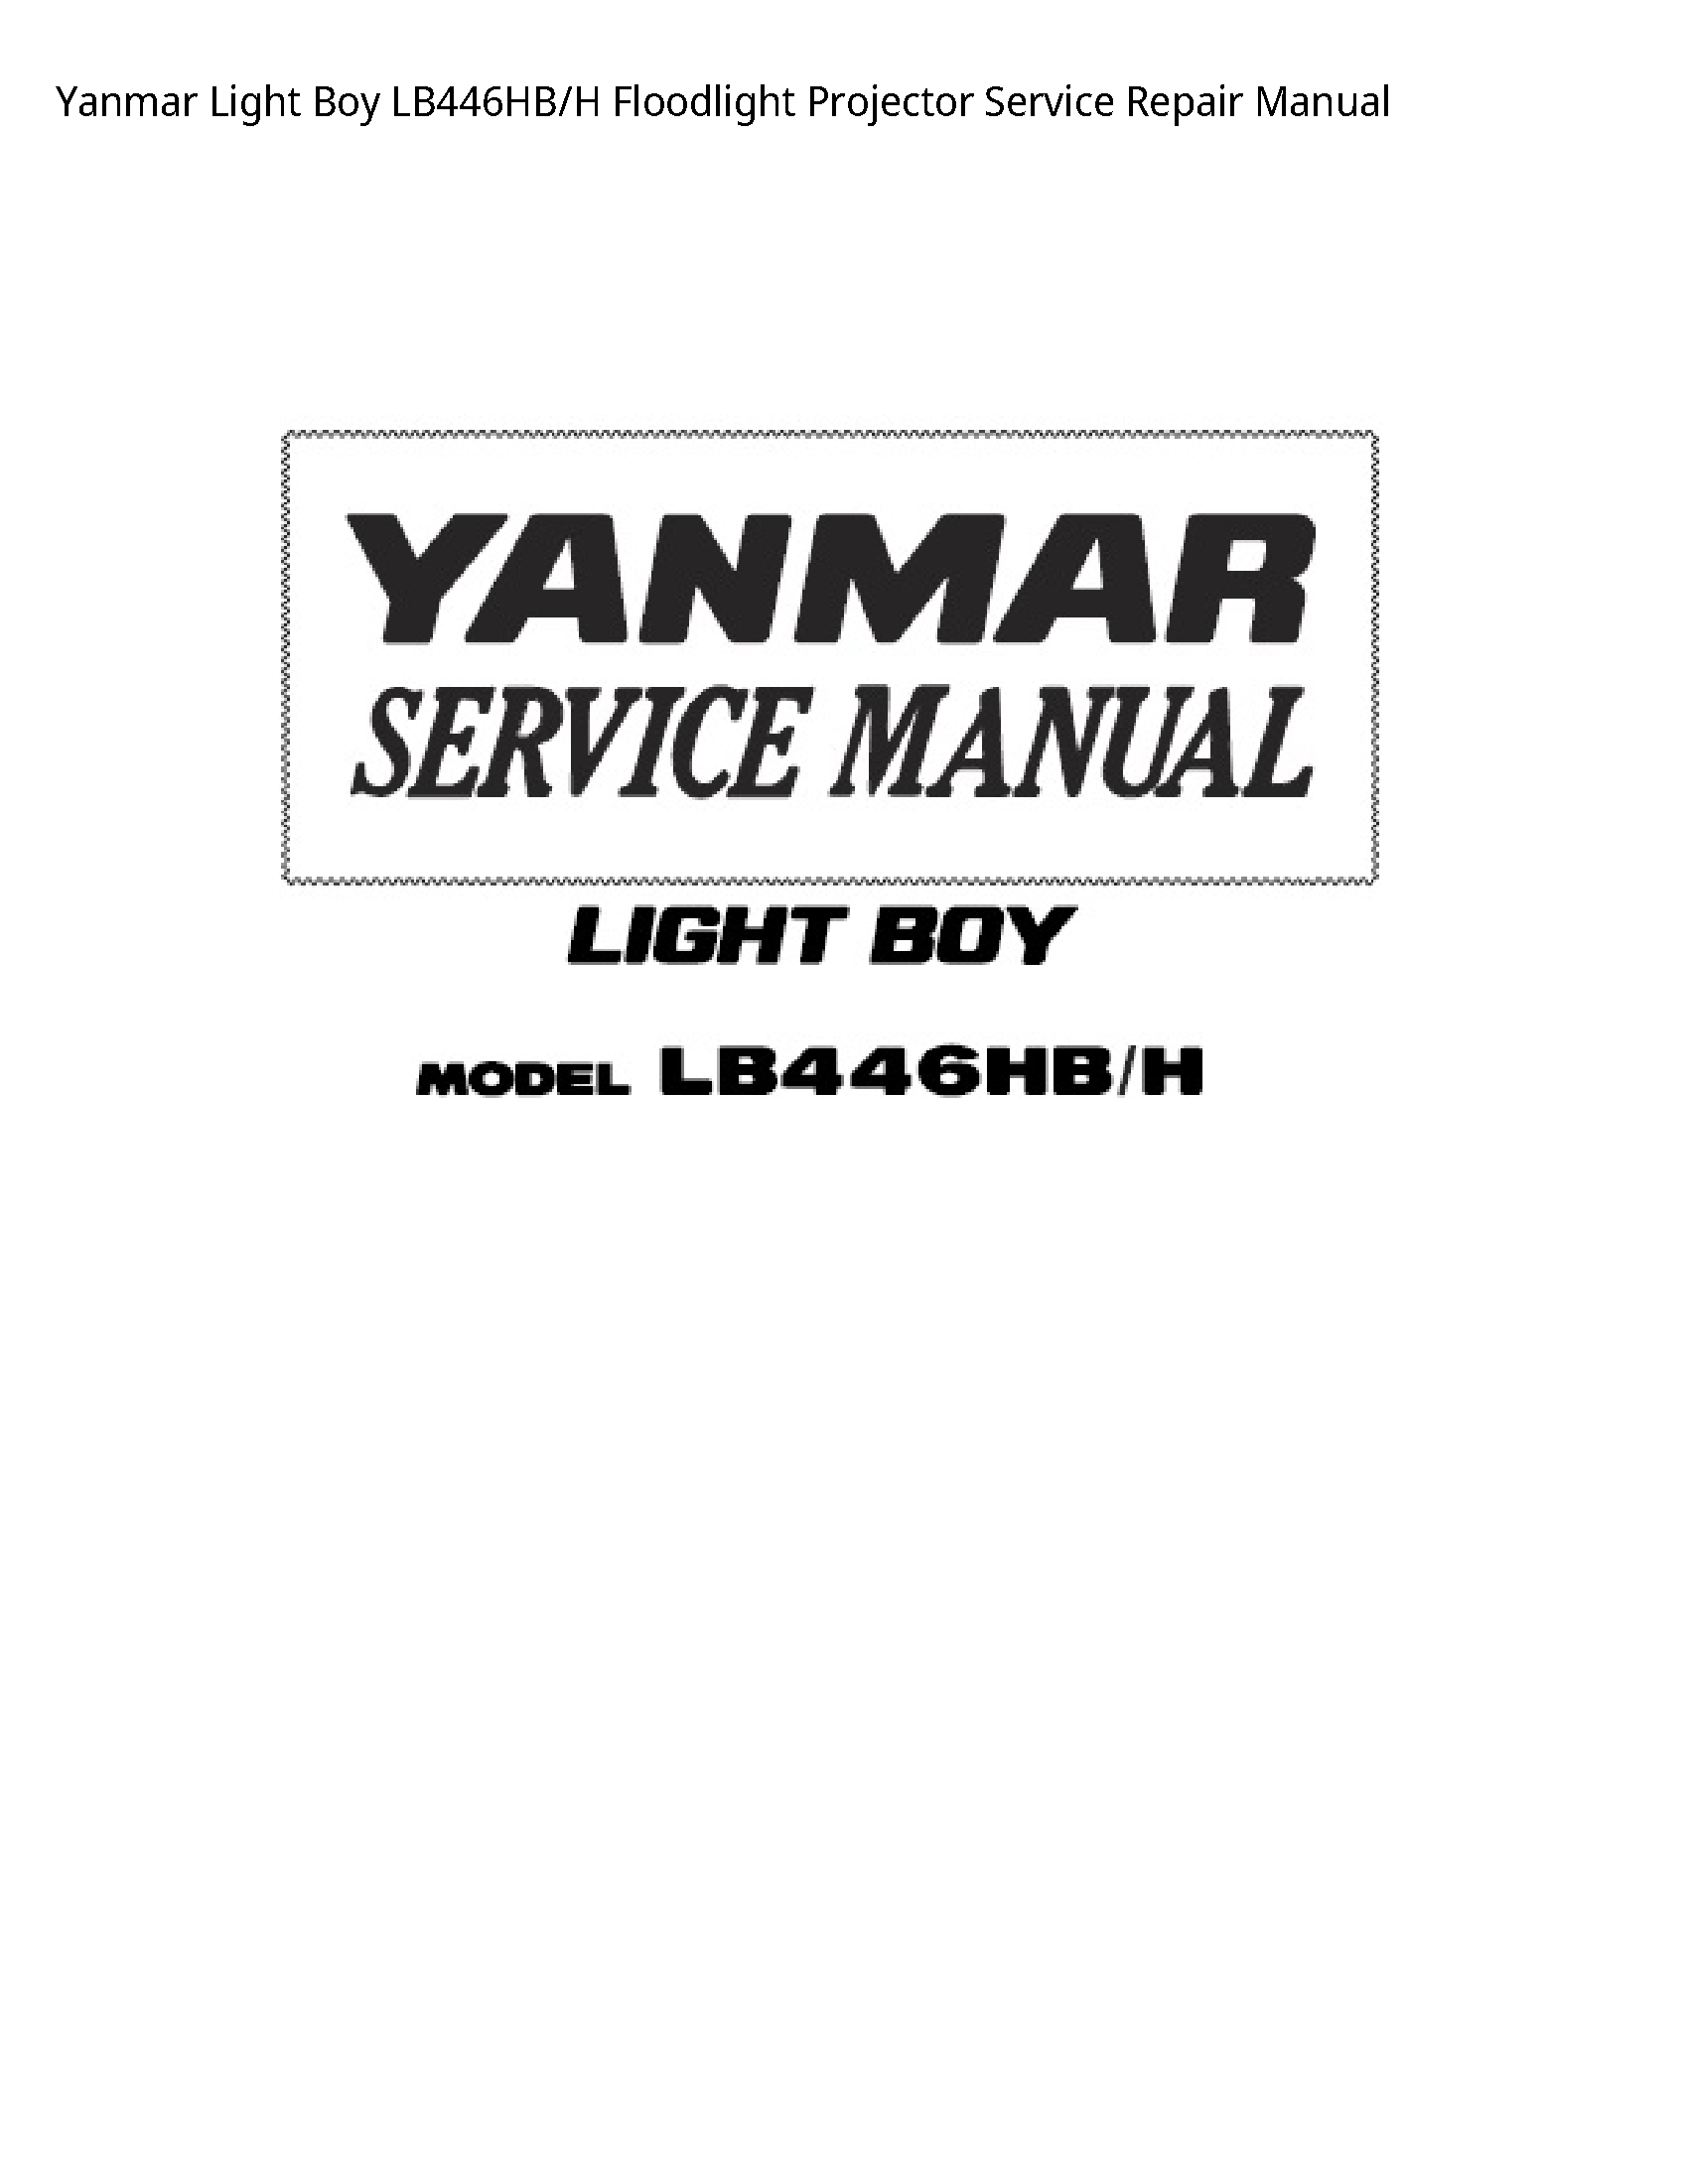 Yanmar LB446HB Light Boy Floodlight Projector manual